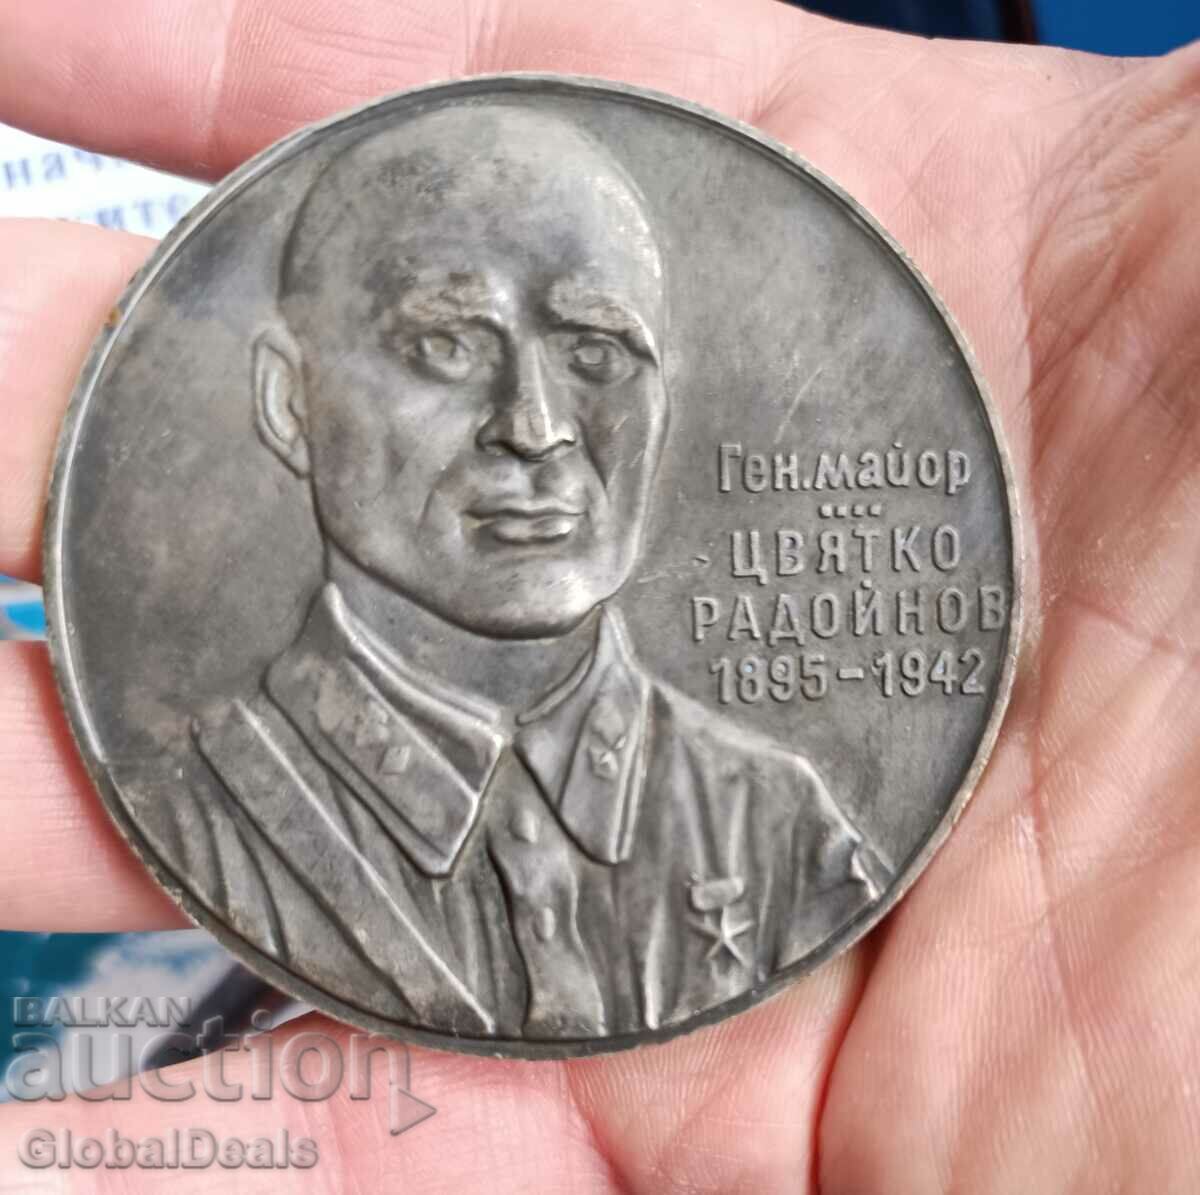 Medalie la masa de scufundări generalul Tsviatko Radoynov